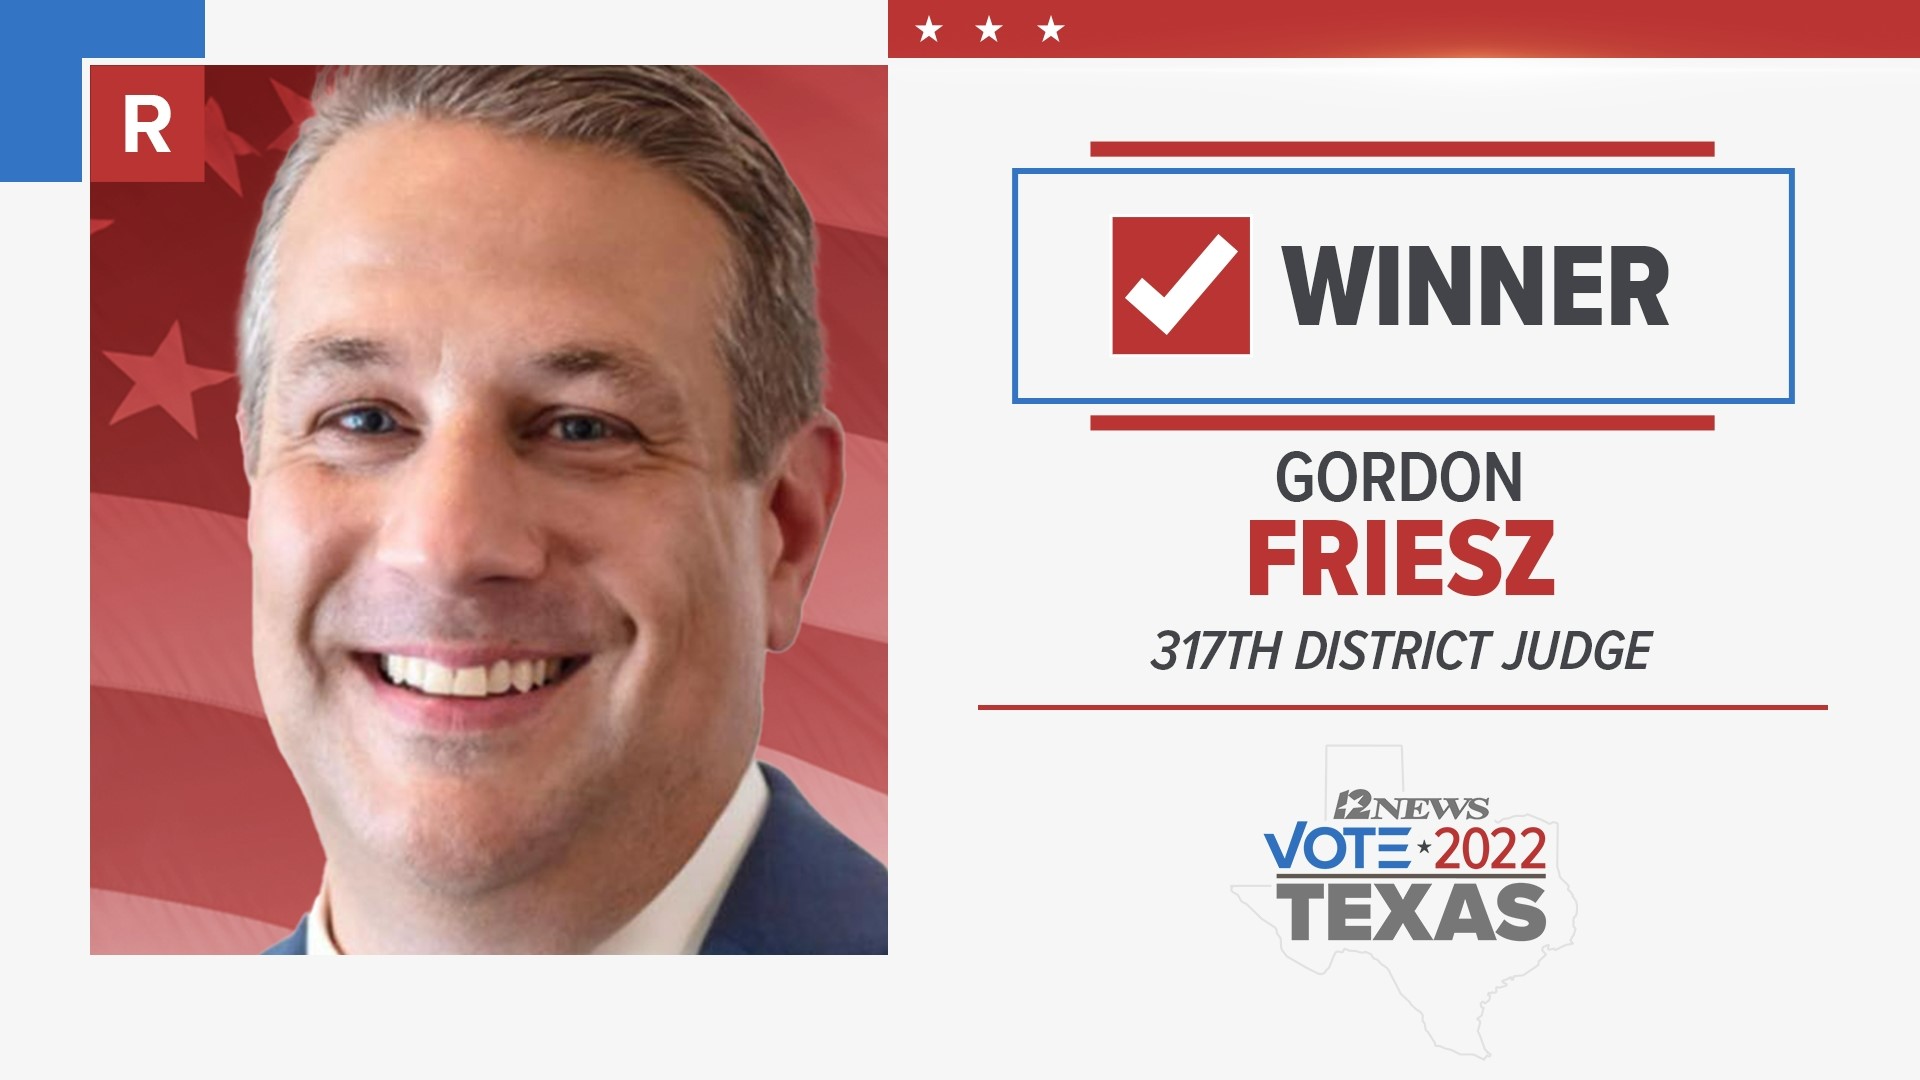 Gordon Friesz beat Chelsie Ramos by more than 6,000 votes.